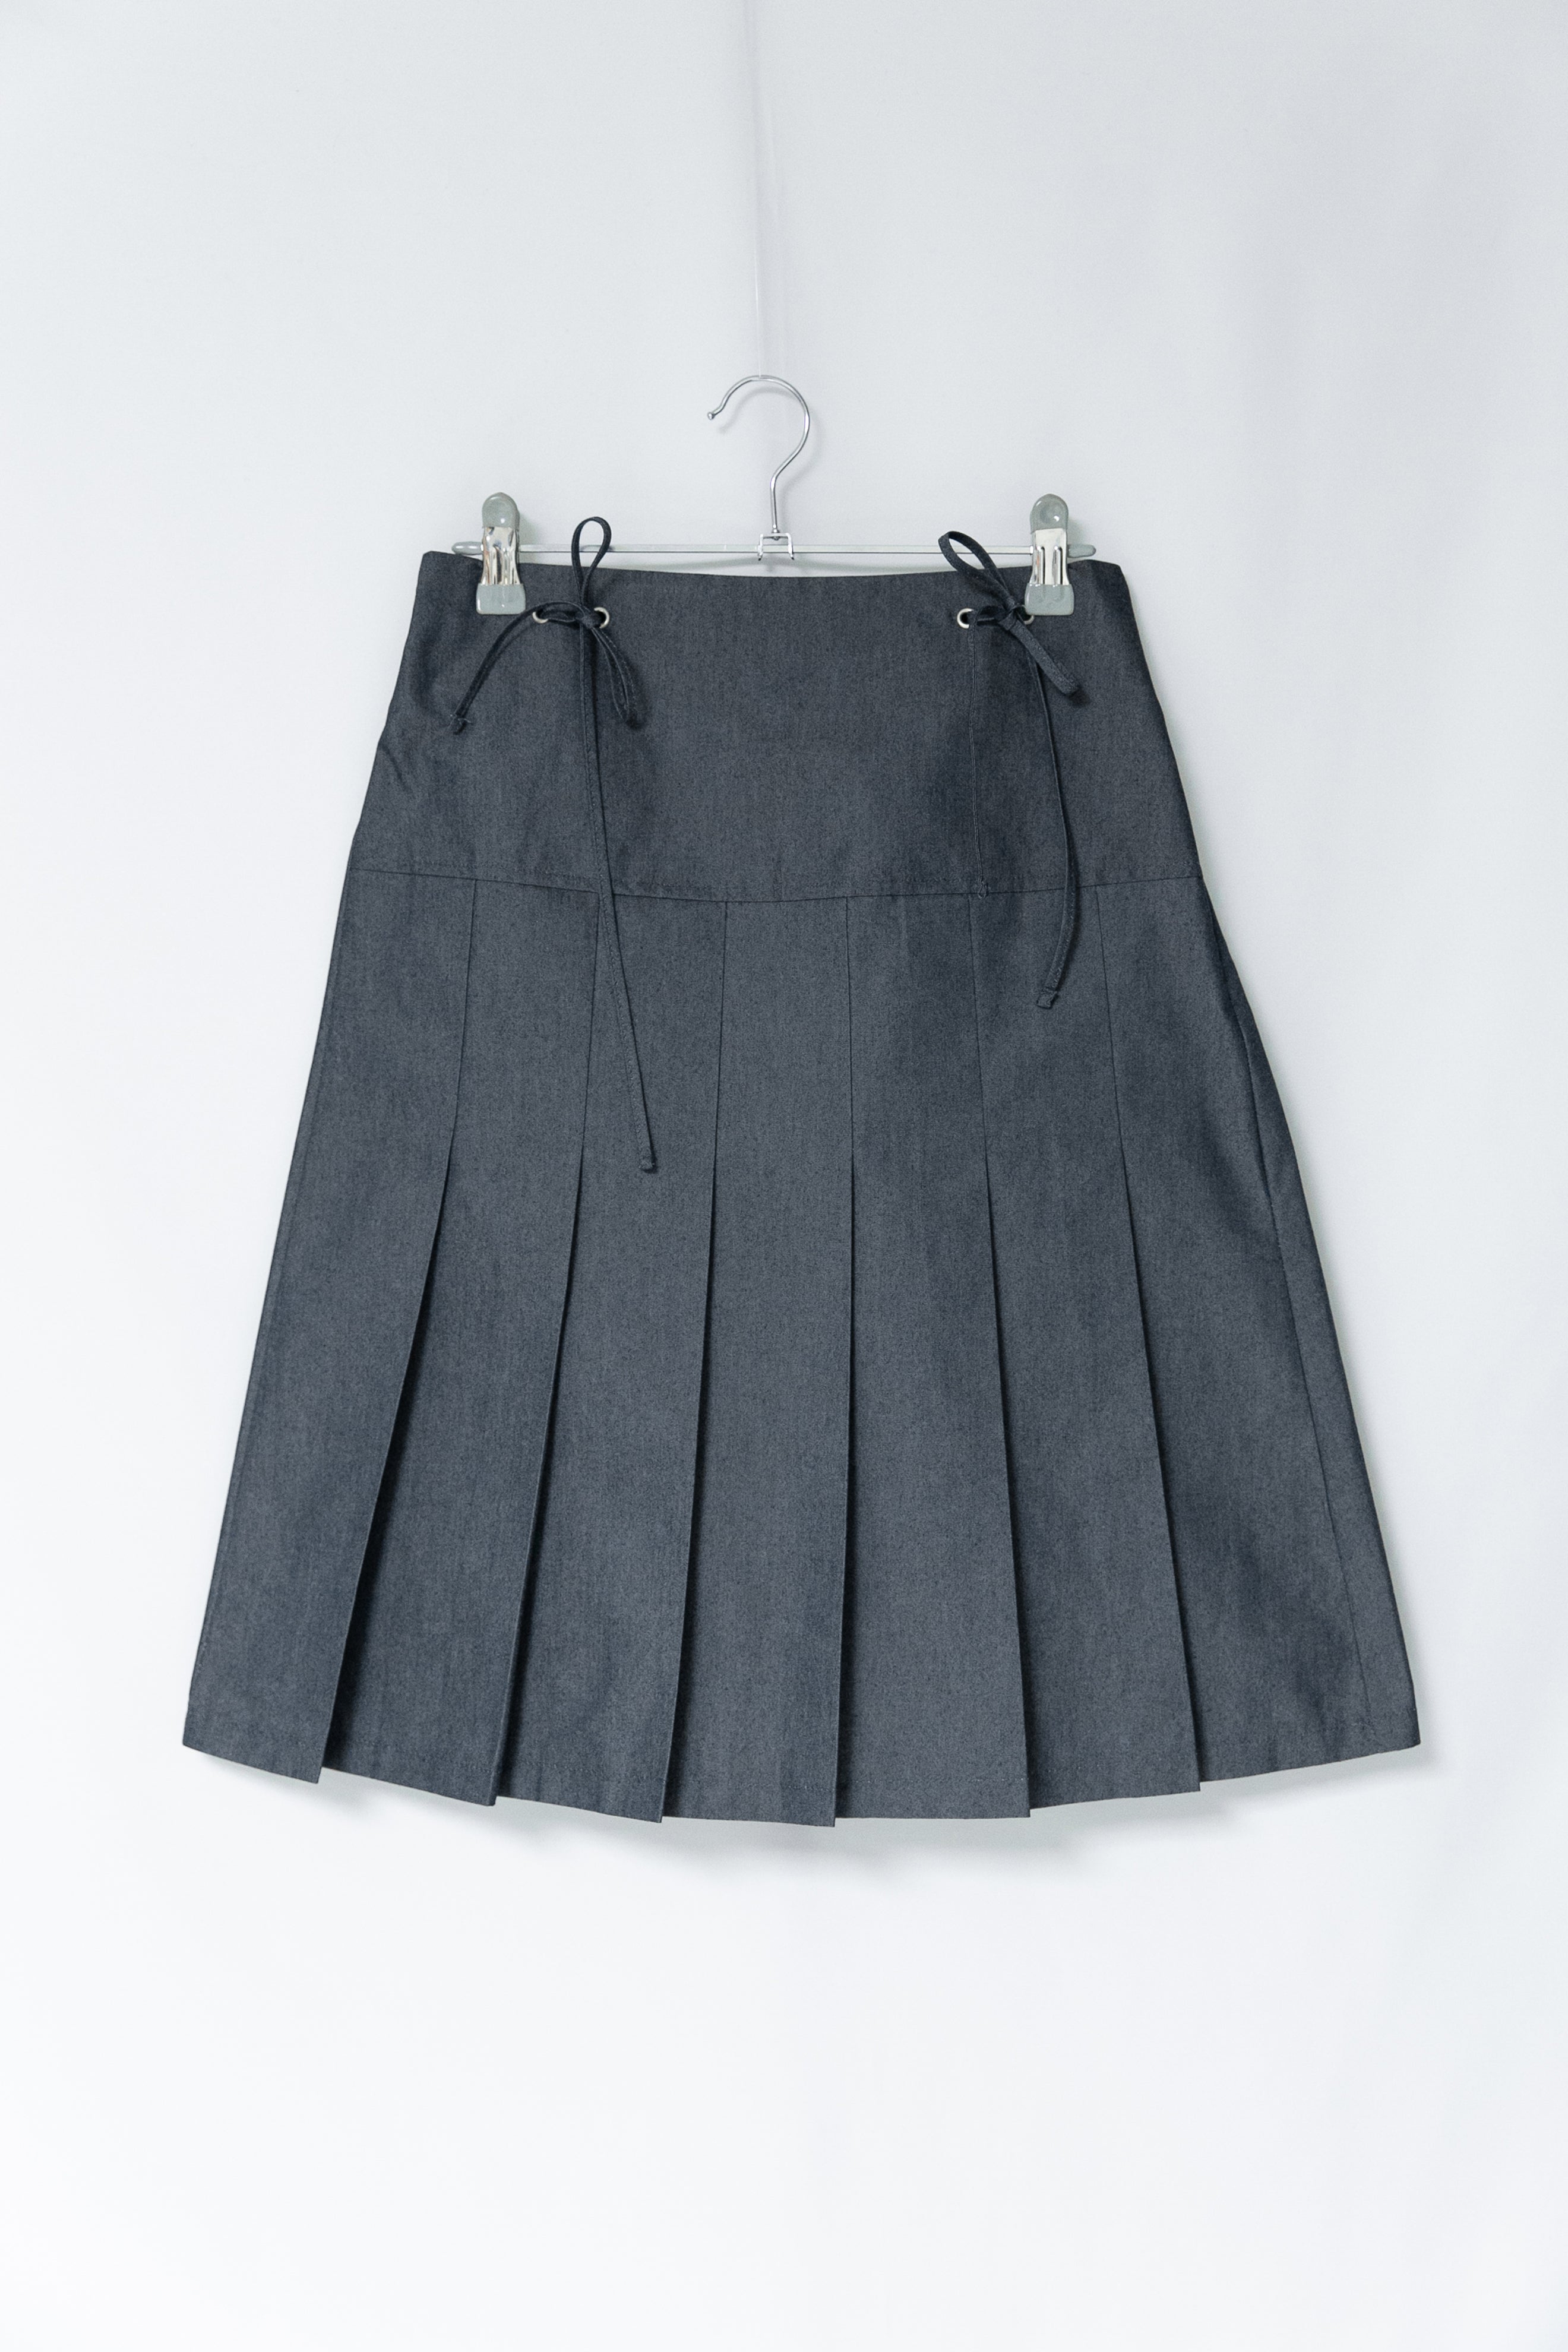 eyelet strap midi pleats skirt(2colors)